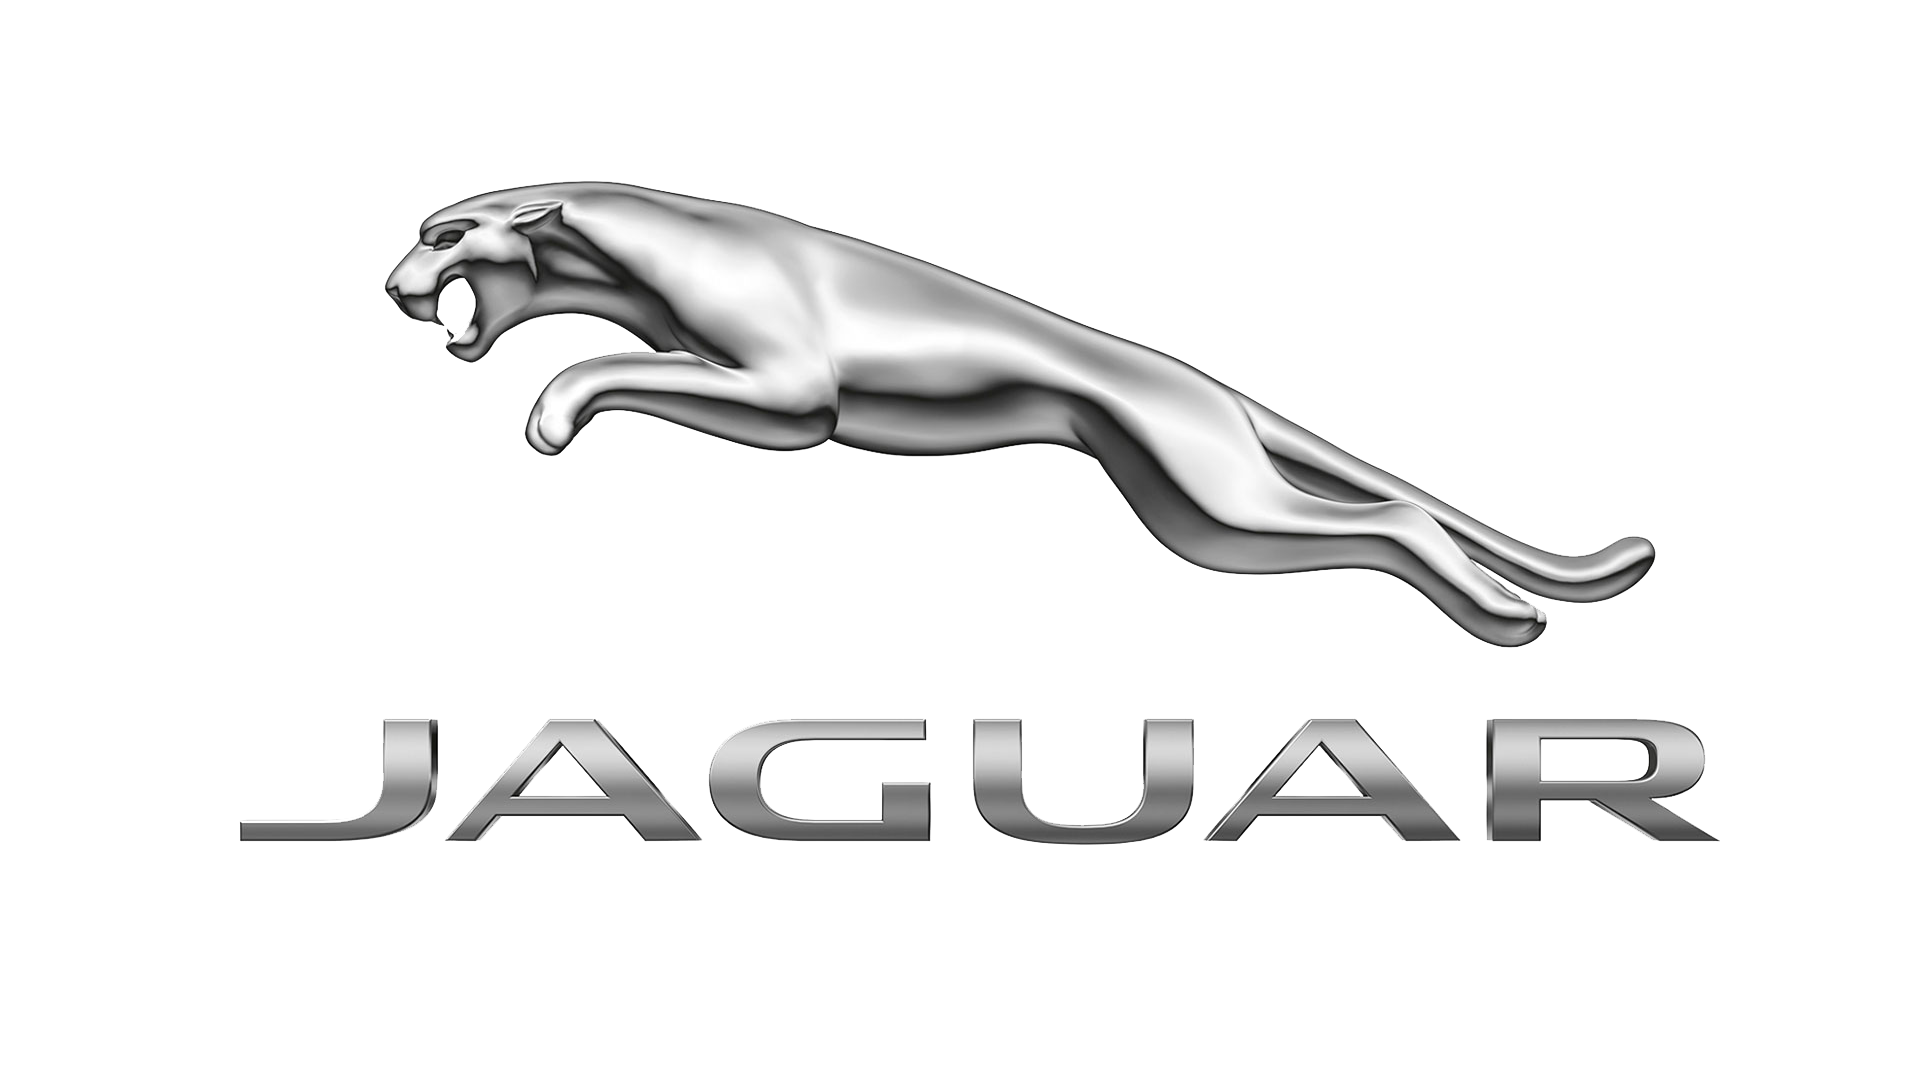 1920X1080 Hd Png - Jaguar Black And White, Transparent background PNG HD thumbnail